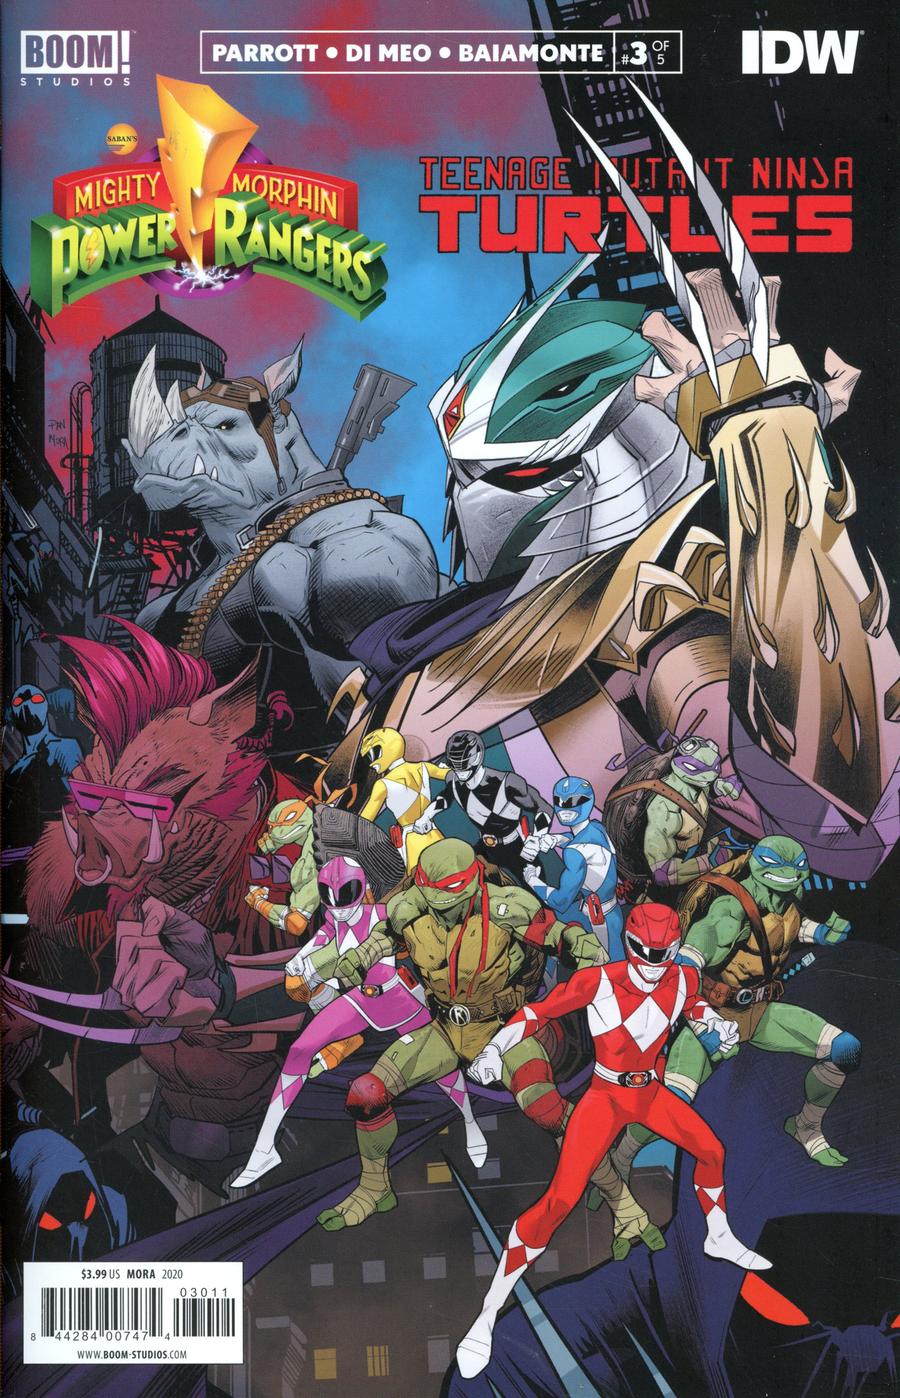 Mighty Morphin Power Rangers Teenage Mutant Ninja Turtles #3 Cover A Regular Dan Mora Cover